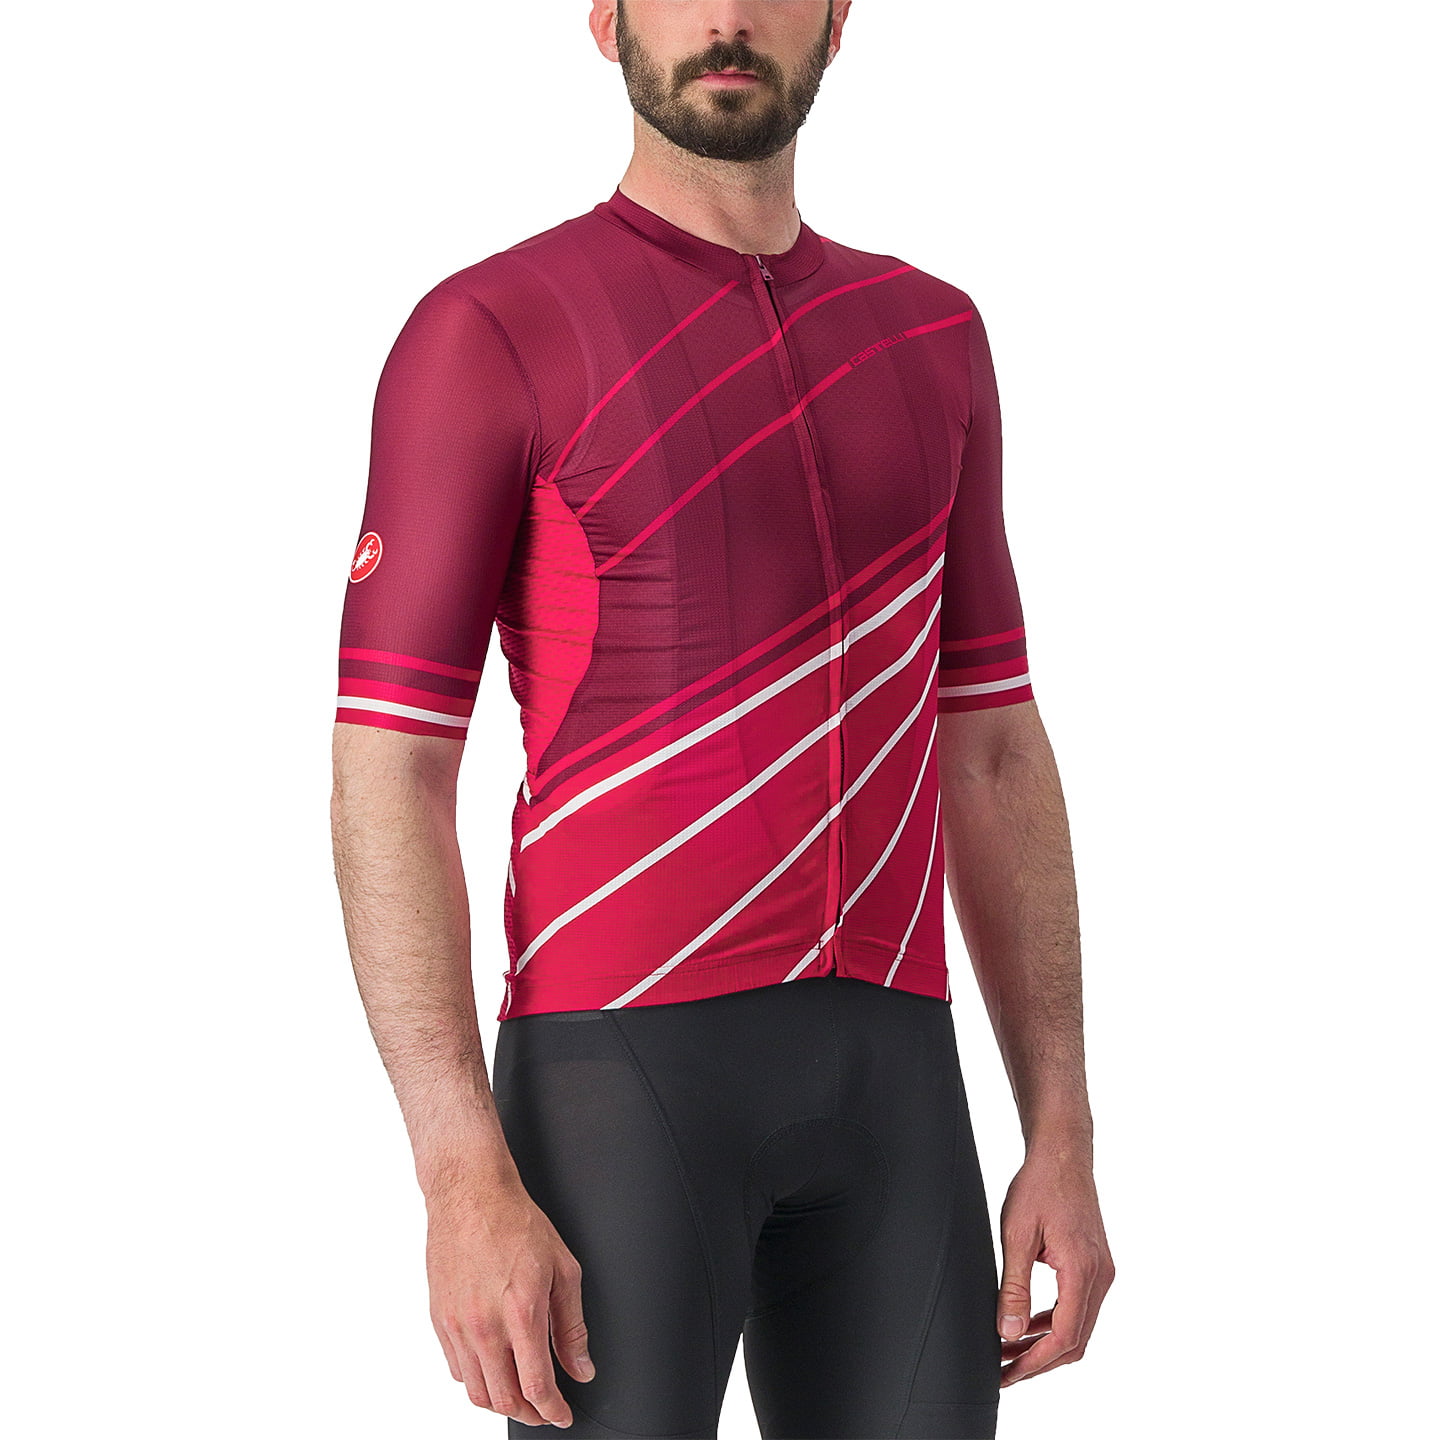 CASTELLI Speed Strada Short Sleeve Jersey Short Sleeve Jersey, for men, size 3XL, Cycling jersey, Cycle clothing